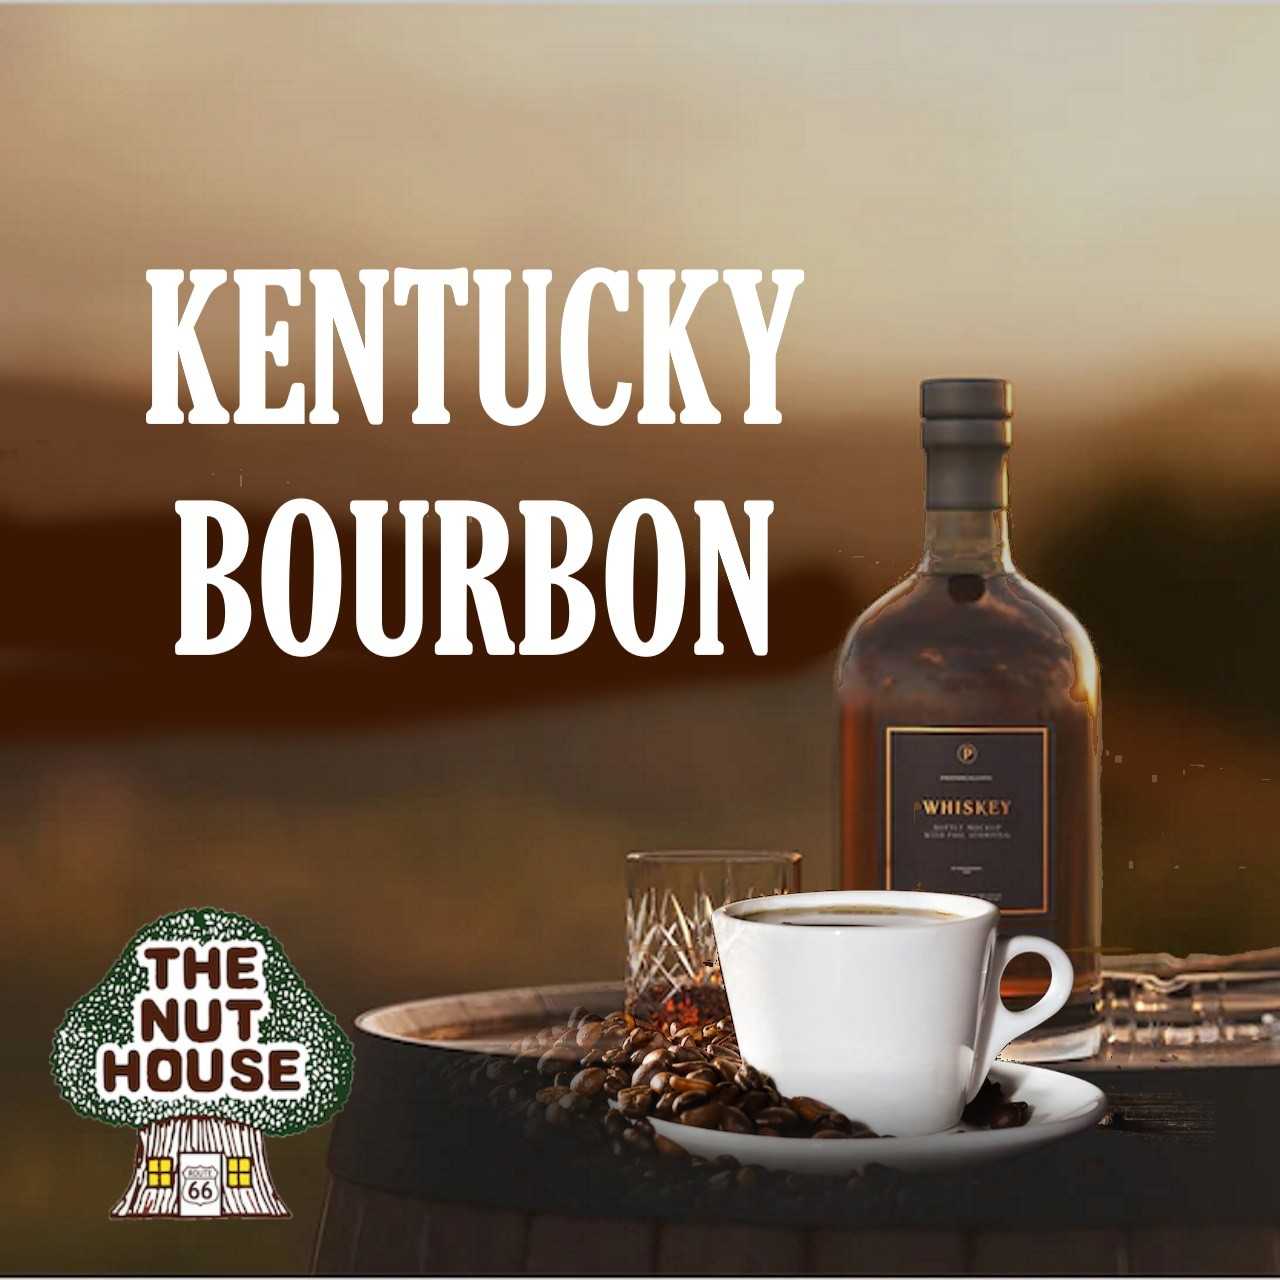 Duke Cannon Big Bar of Soap - A Taste of Kentucky